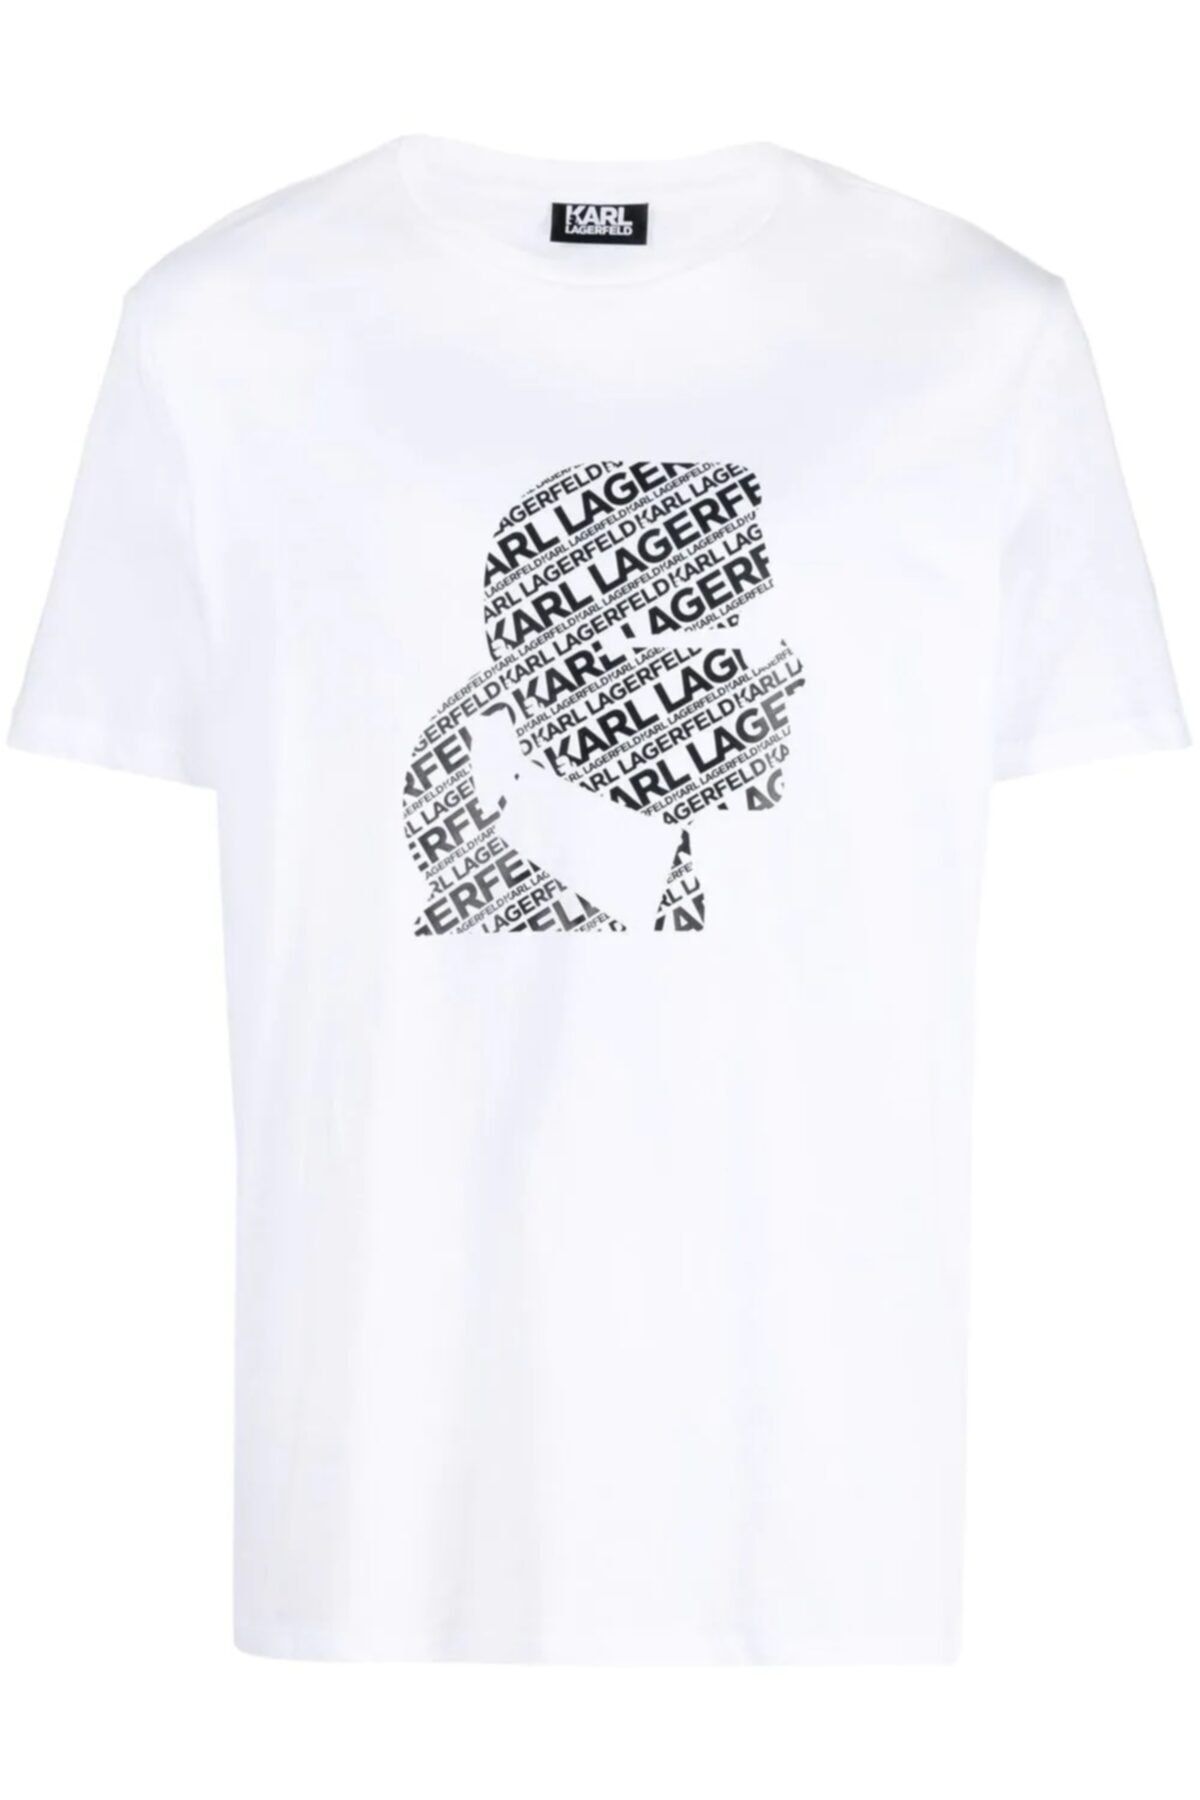 Karl Lagerfeld Complex Head Logo Baskı Beyaz T-shirt